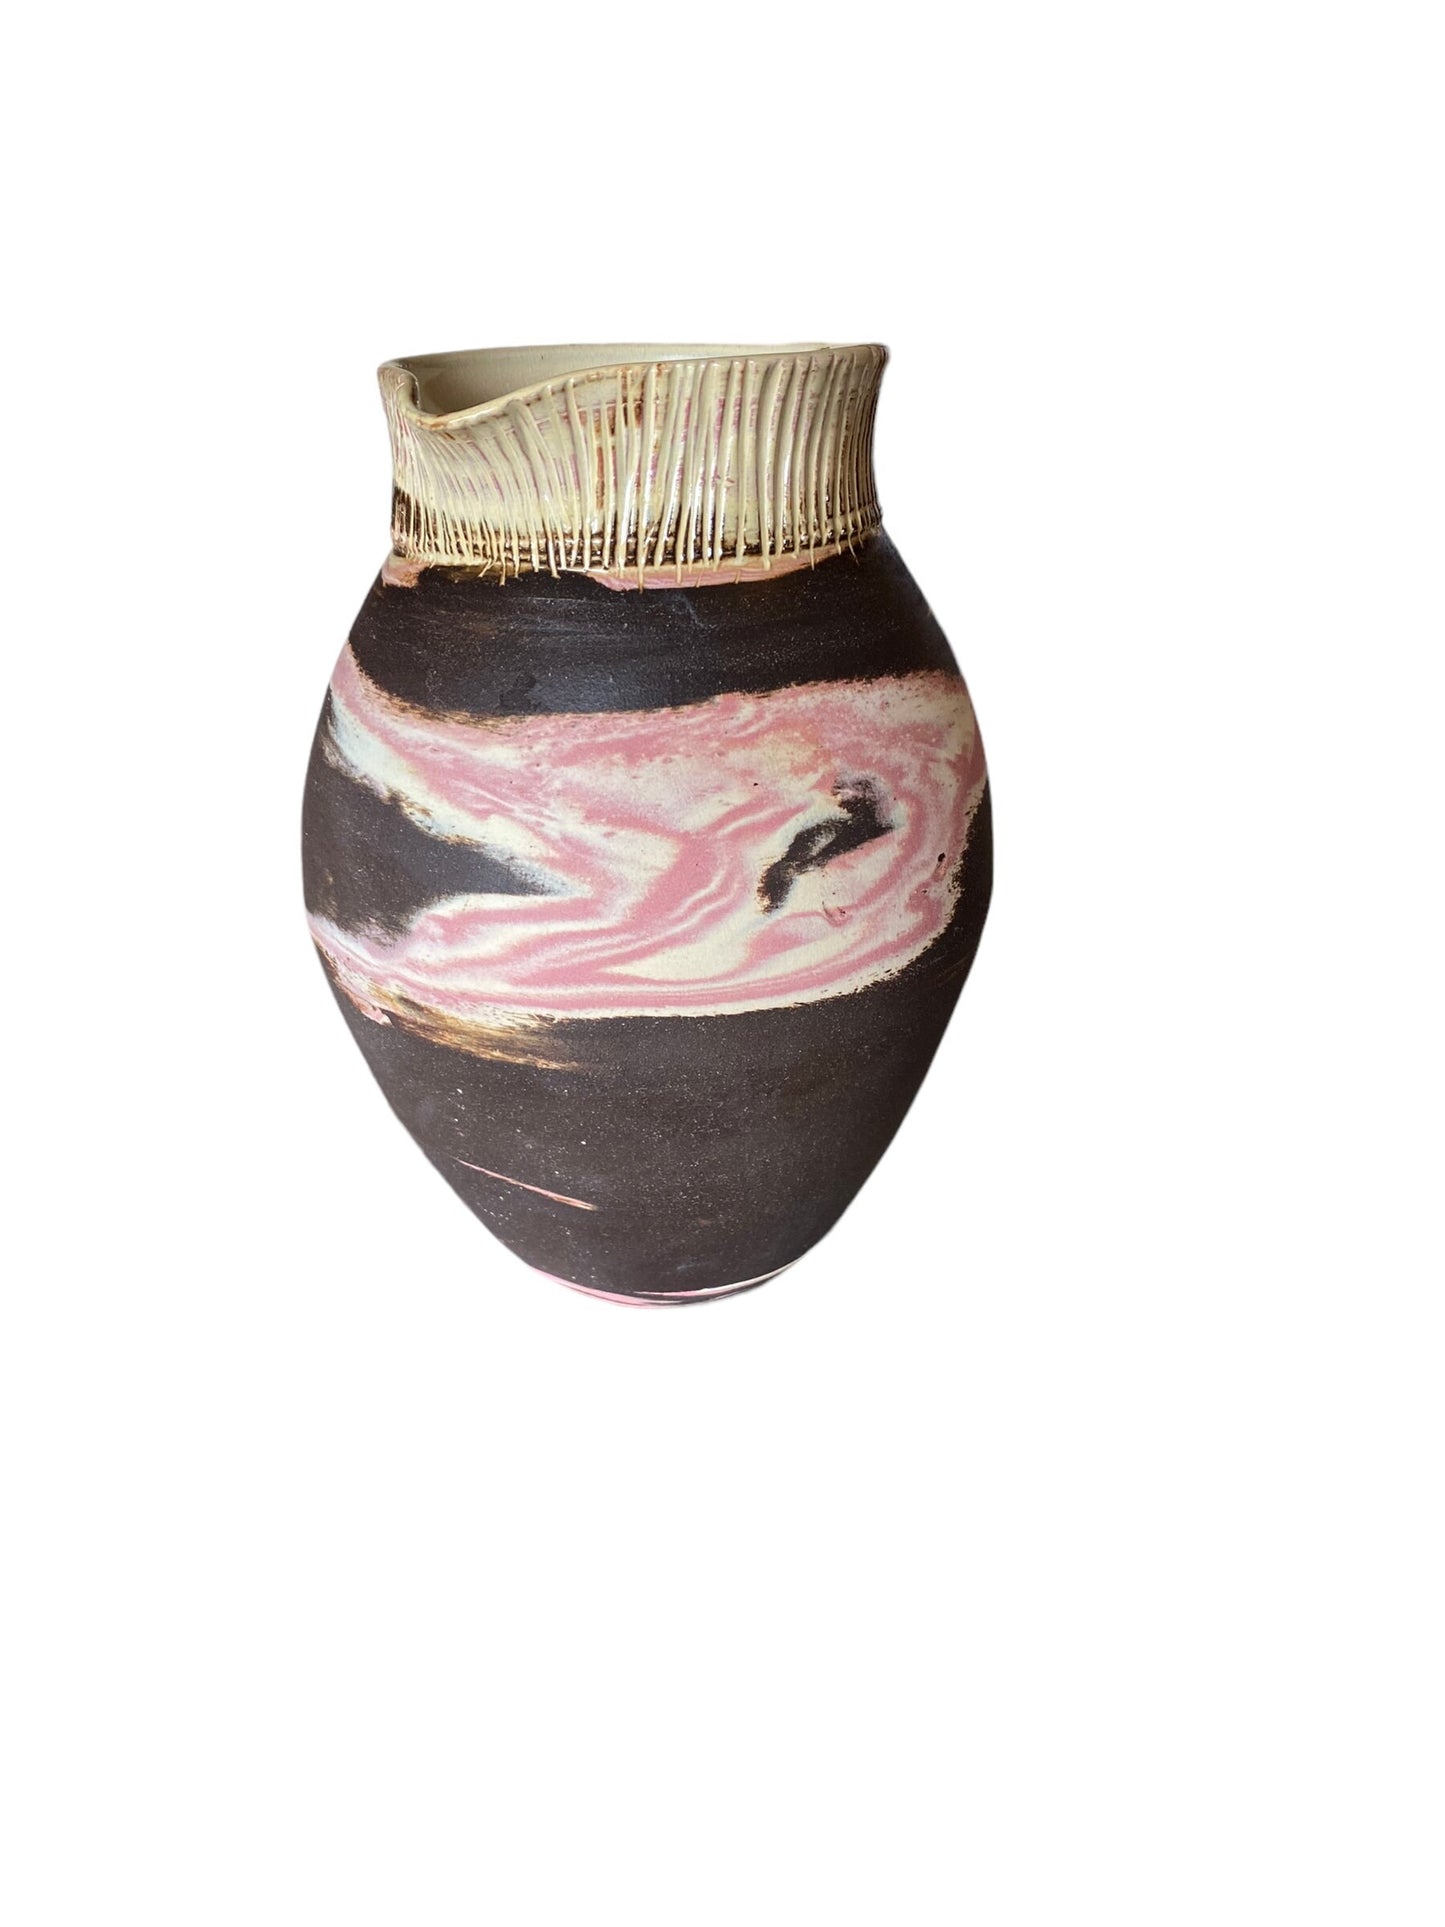 Large Agateware Carved Pitcher: Handcrafted Nerikomi Margarita Pitcher for Stylish Entertaining